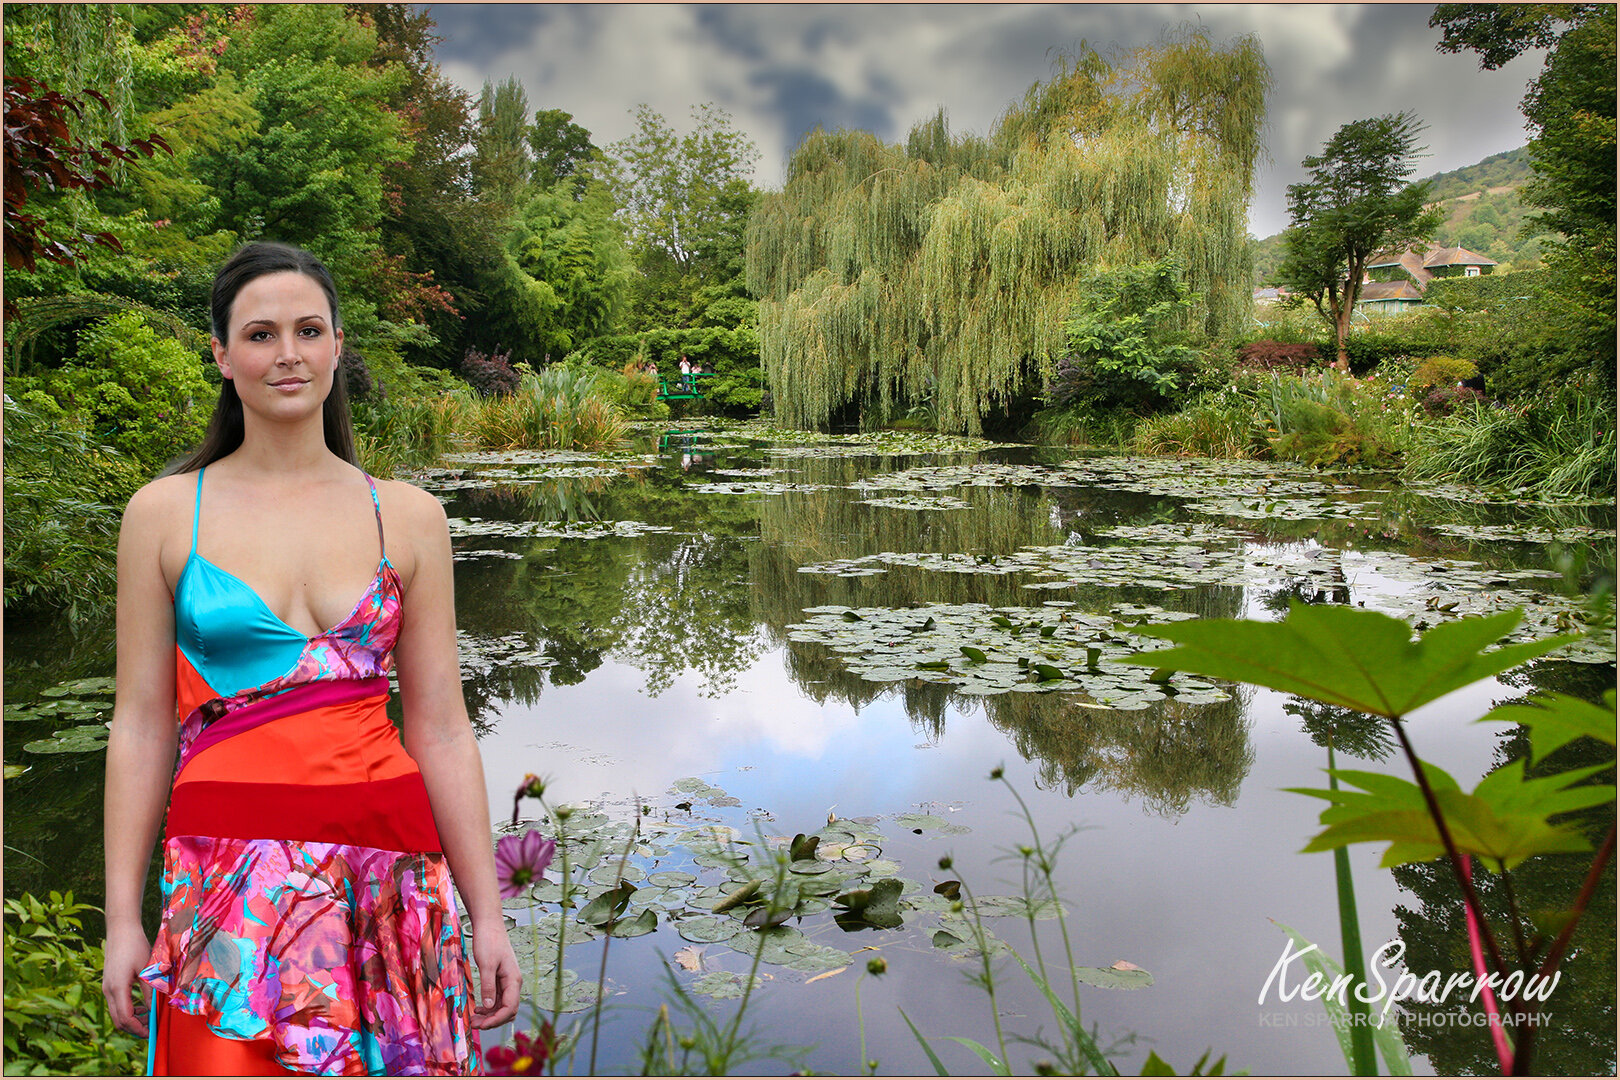 438  Kirsty at Monet's Water Garden